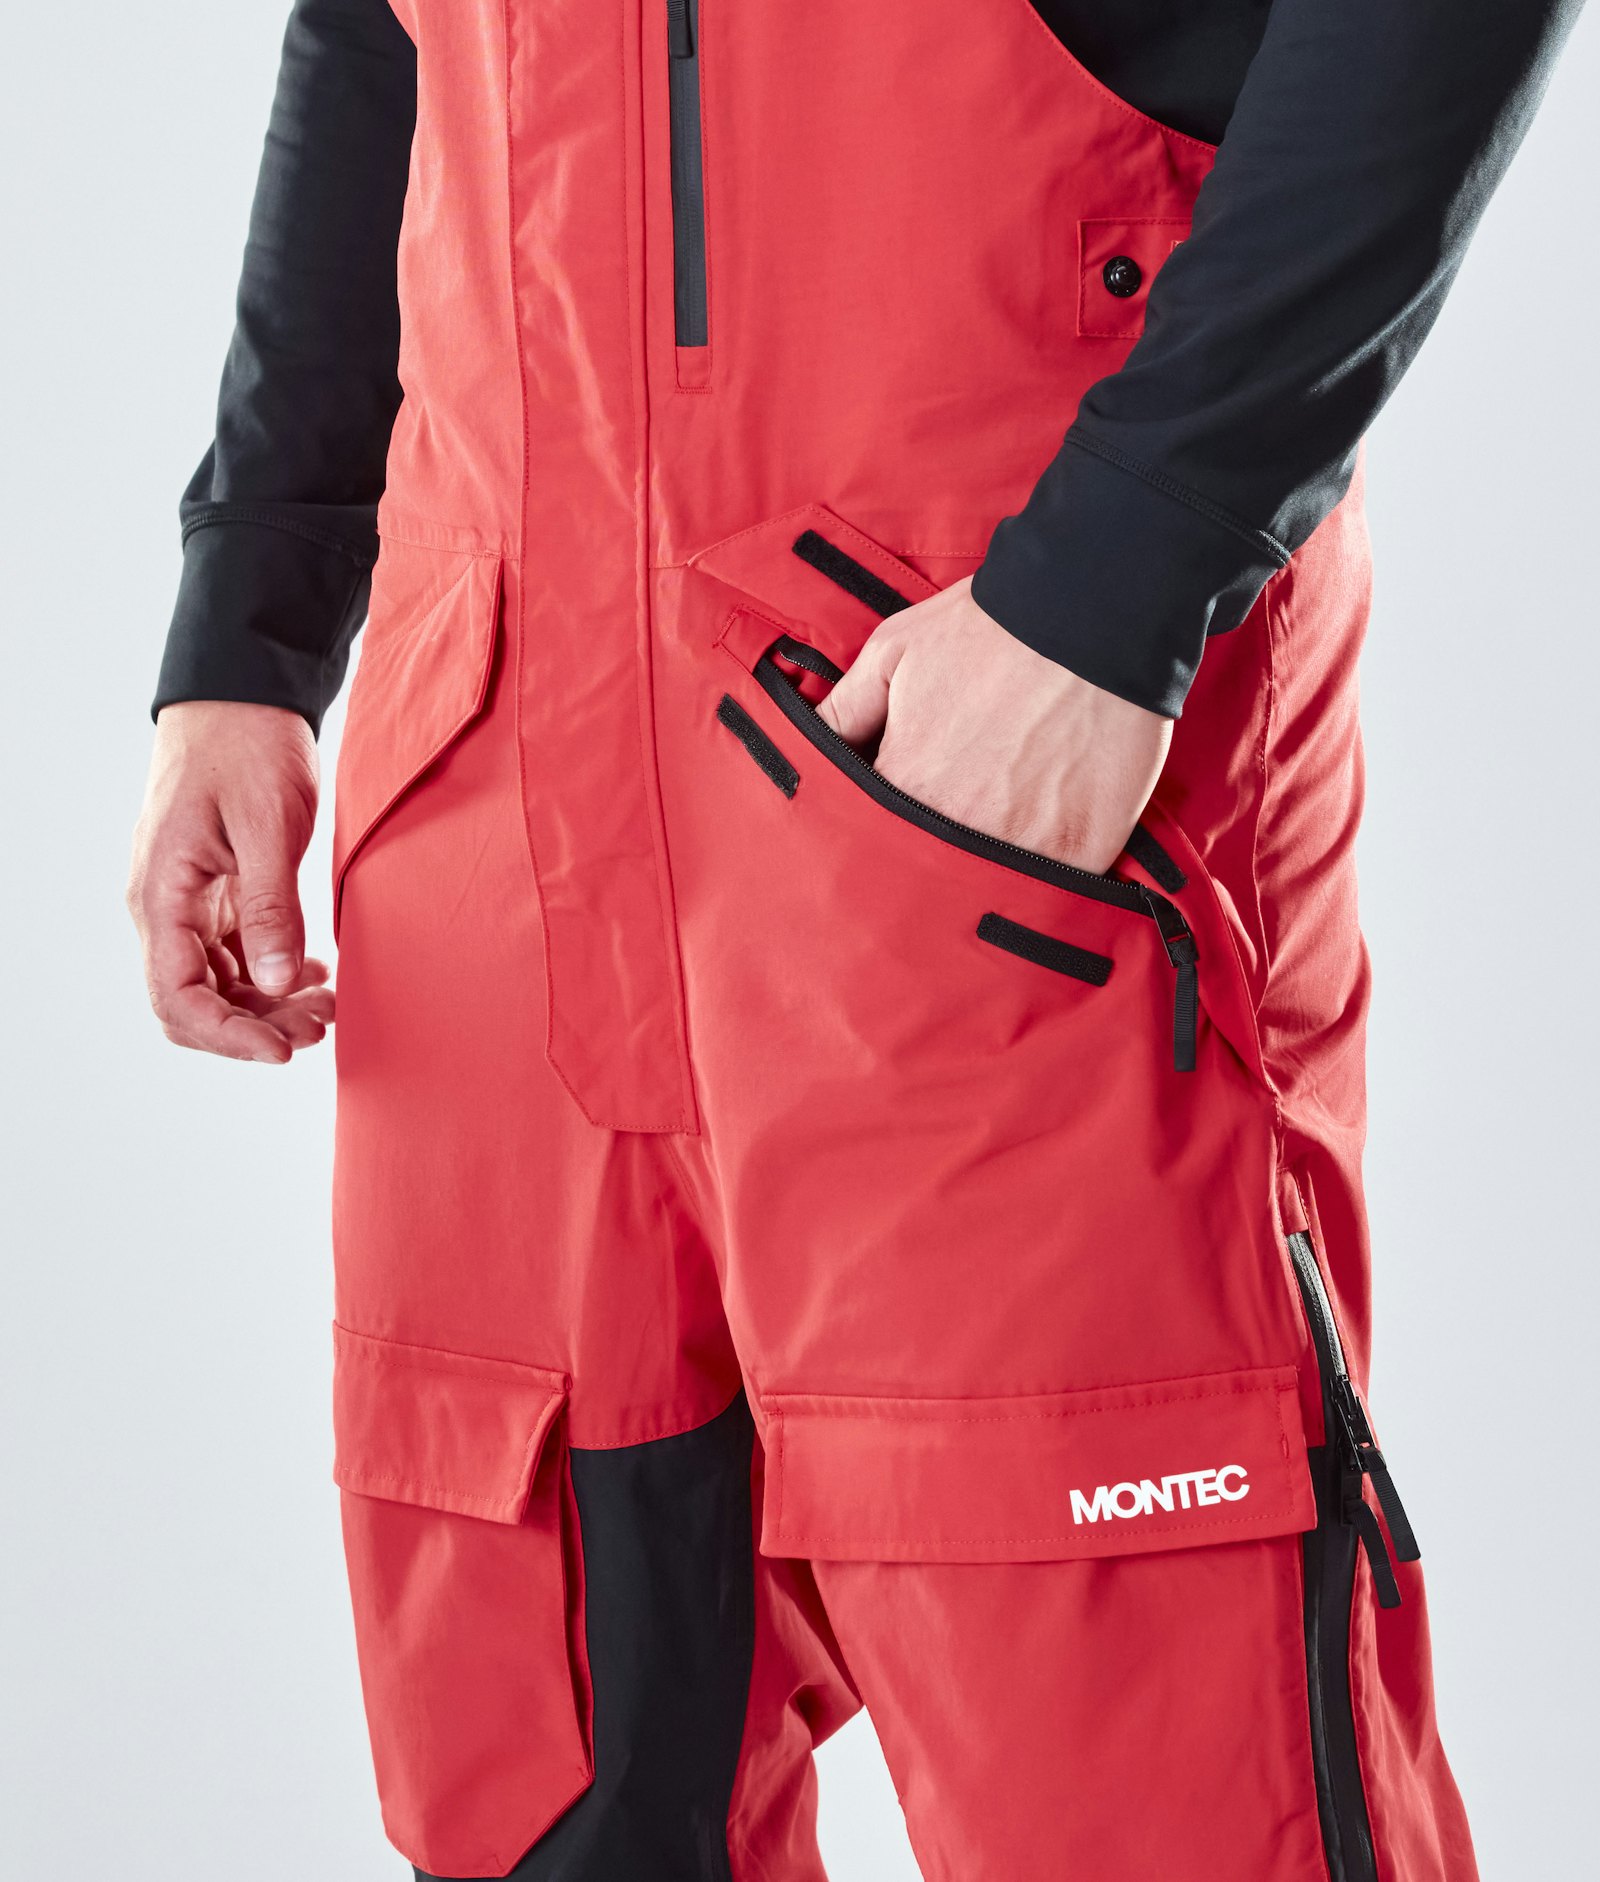 Fawk 2020 Snowboardhose Herren Red/Black